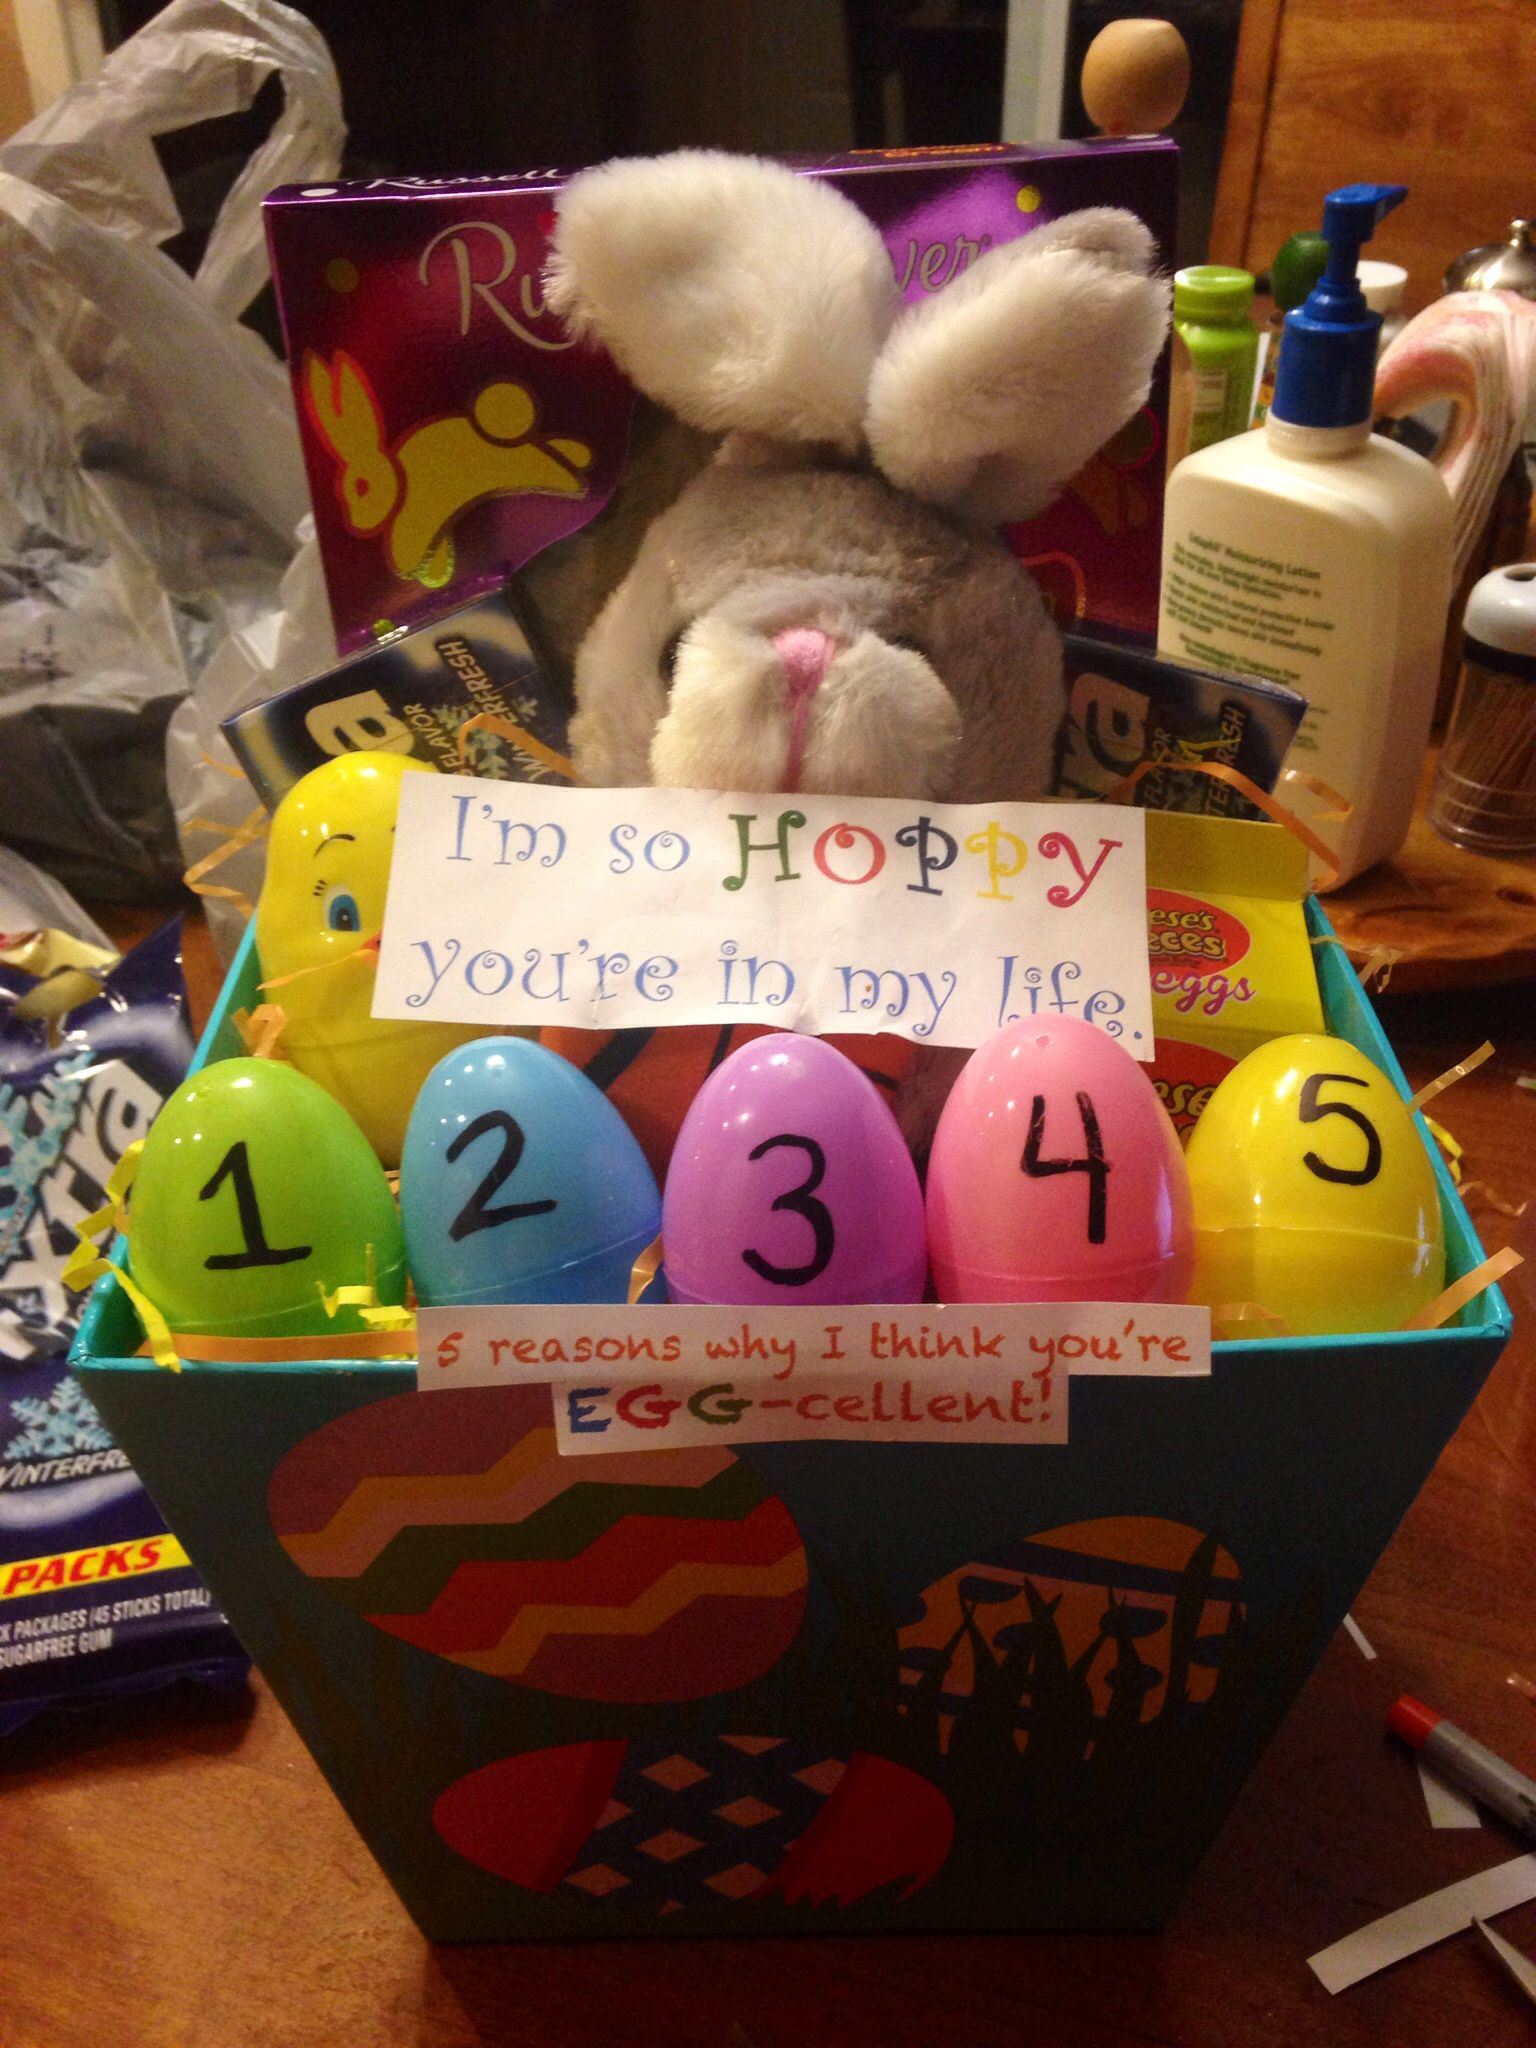 Easter Basket Ideas For Boyfriend
 Easter Basket for girlfriend boyfriend "I m so HOPPY you